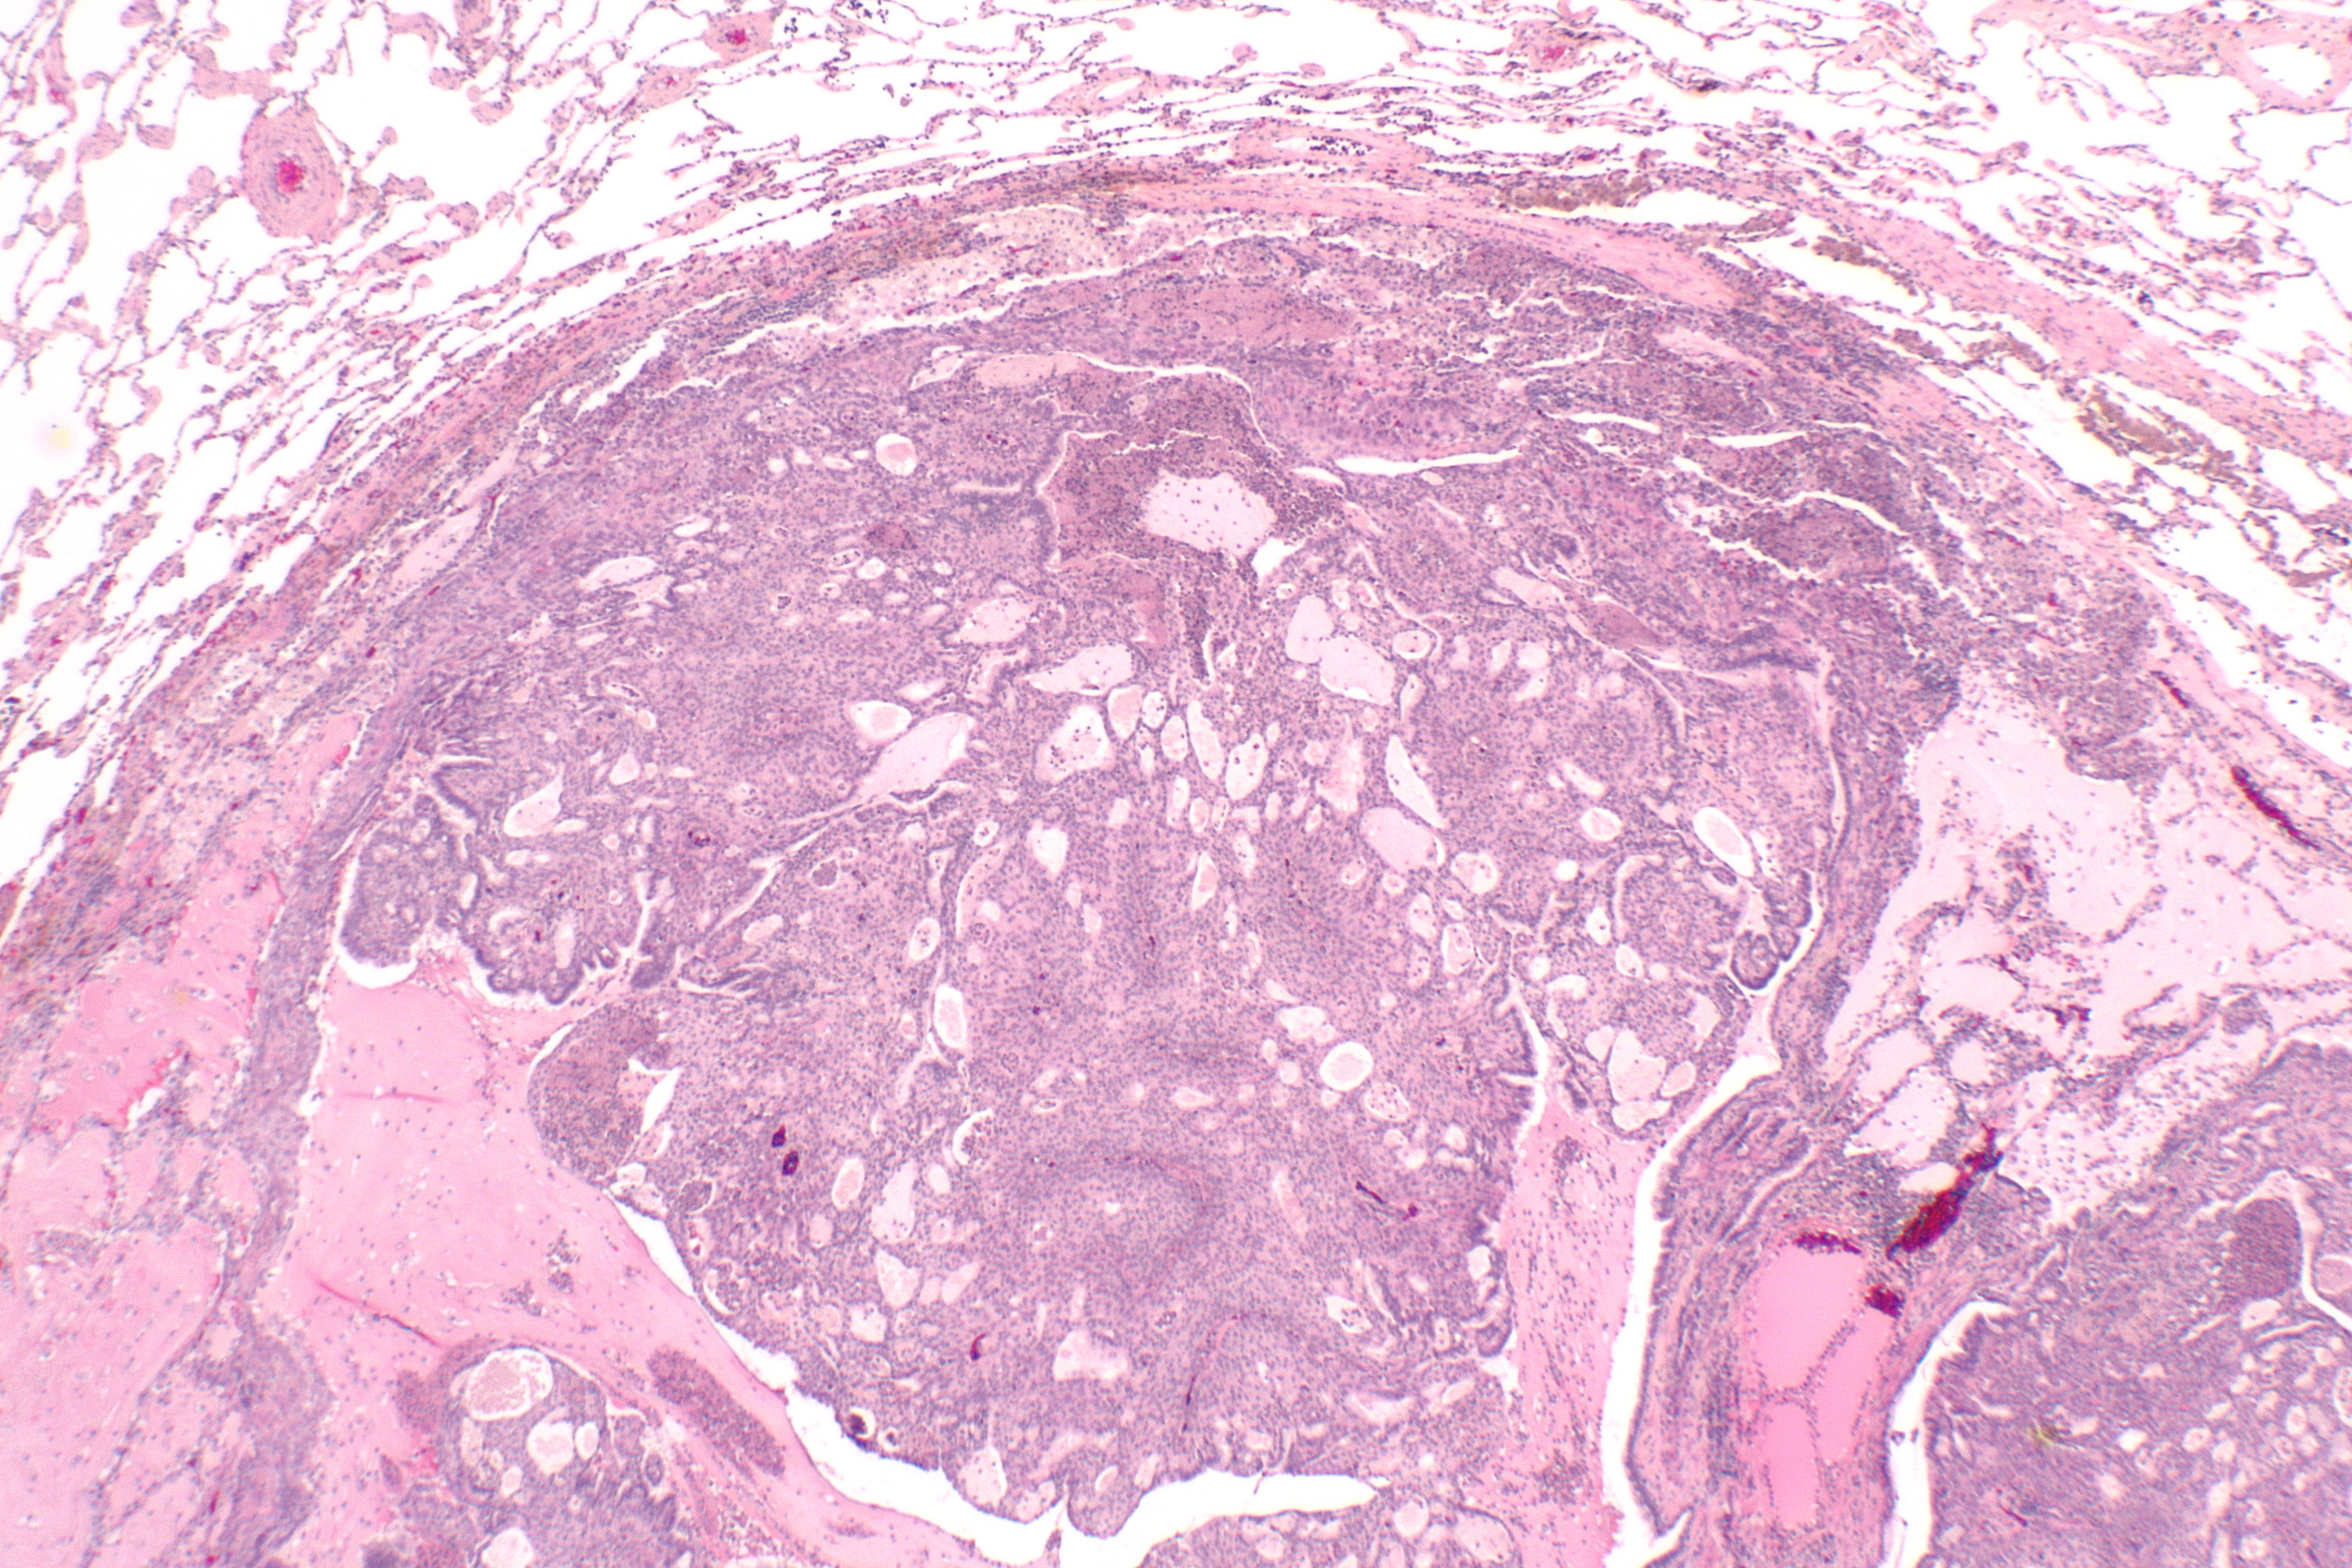 solitary glandular papilloma of the lung